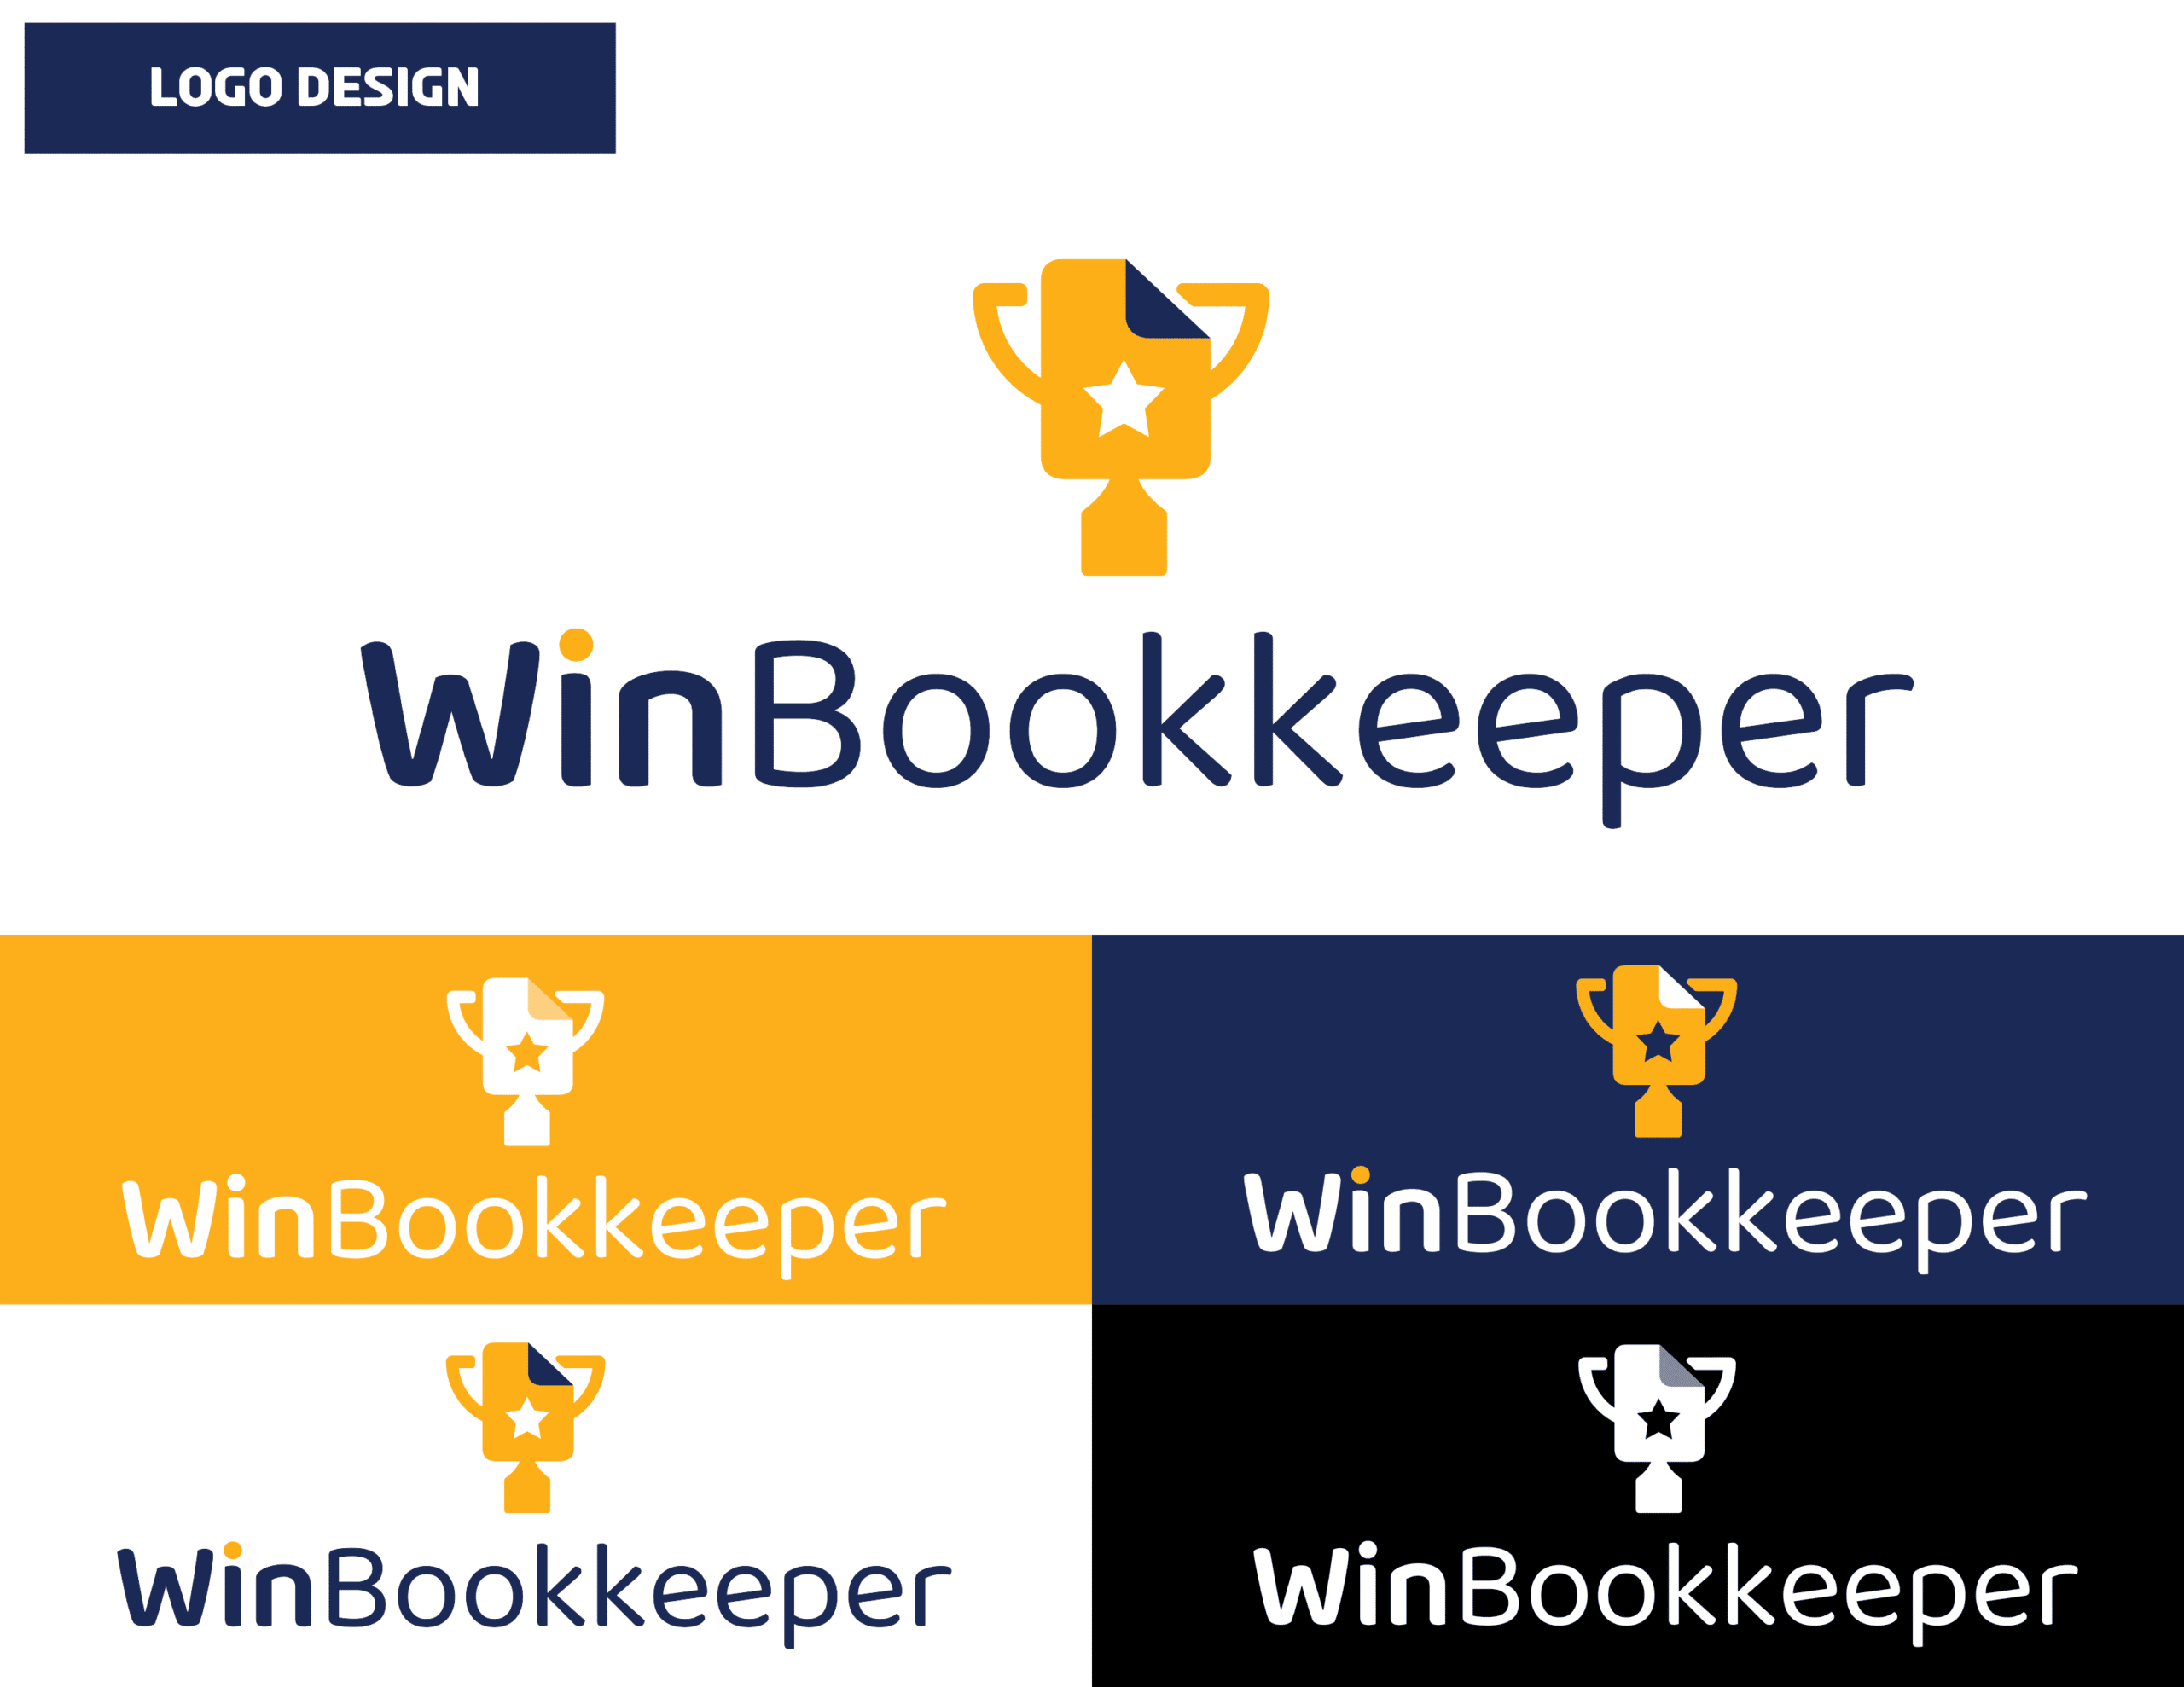 01_WinBookkeeper_Logo Design